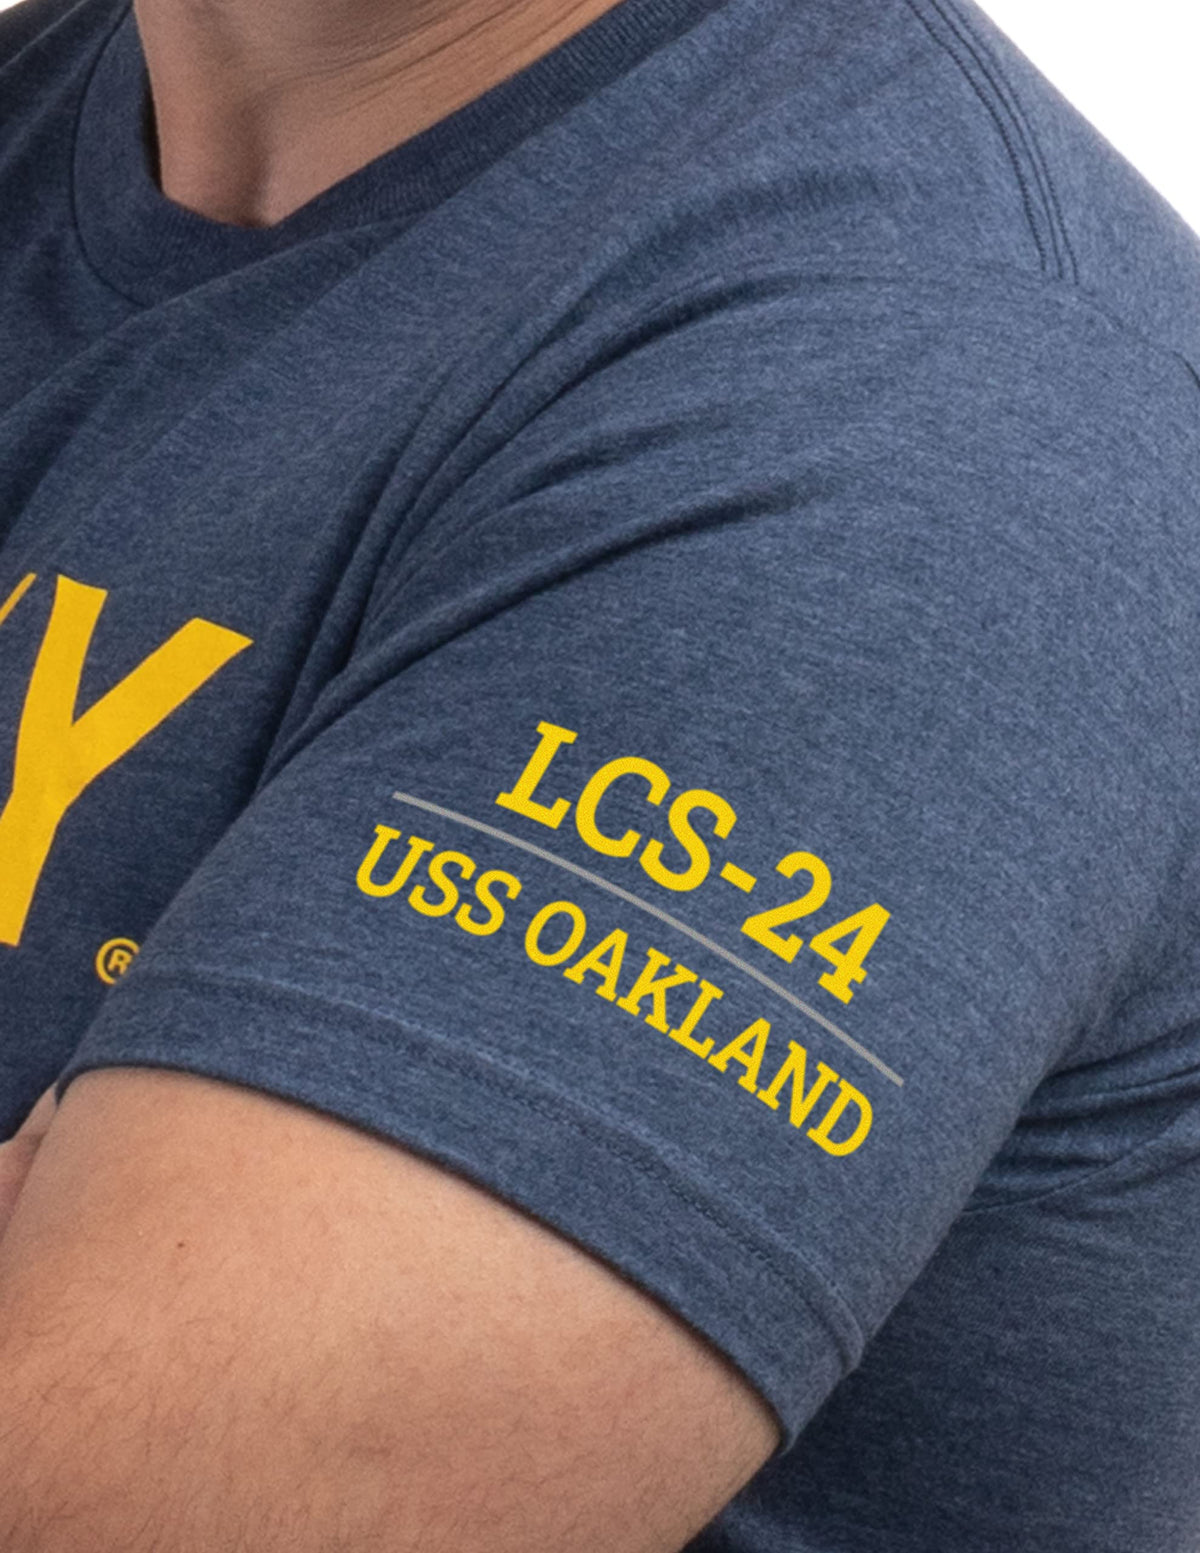 USS Oakland, LCS-24 | U.S. Navy Sailor Veteran USN United States Naval T-shirt for Men Women